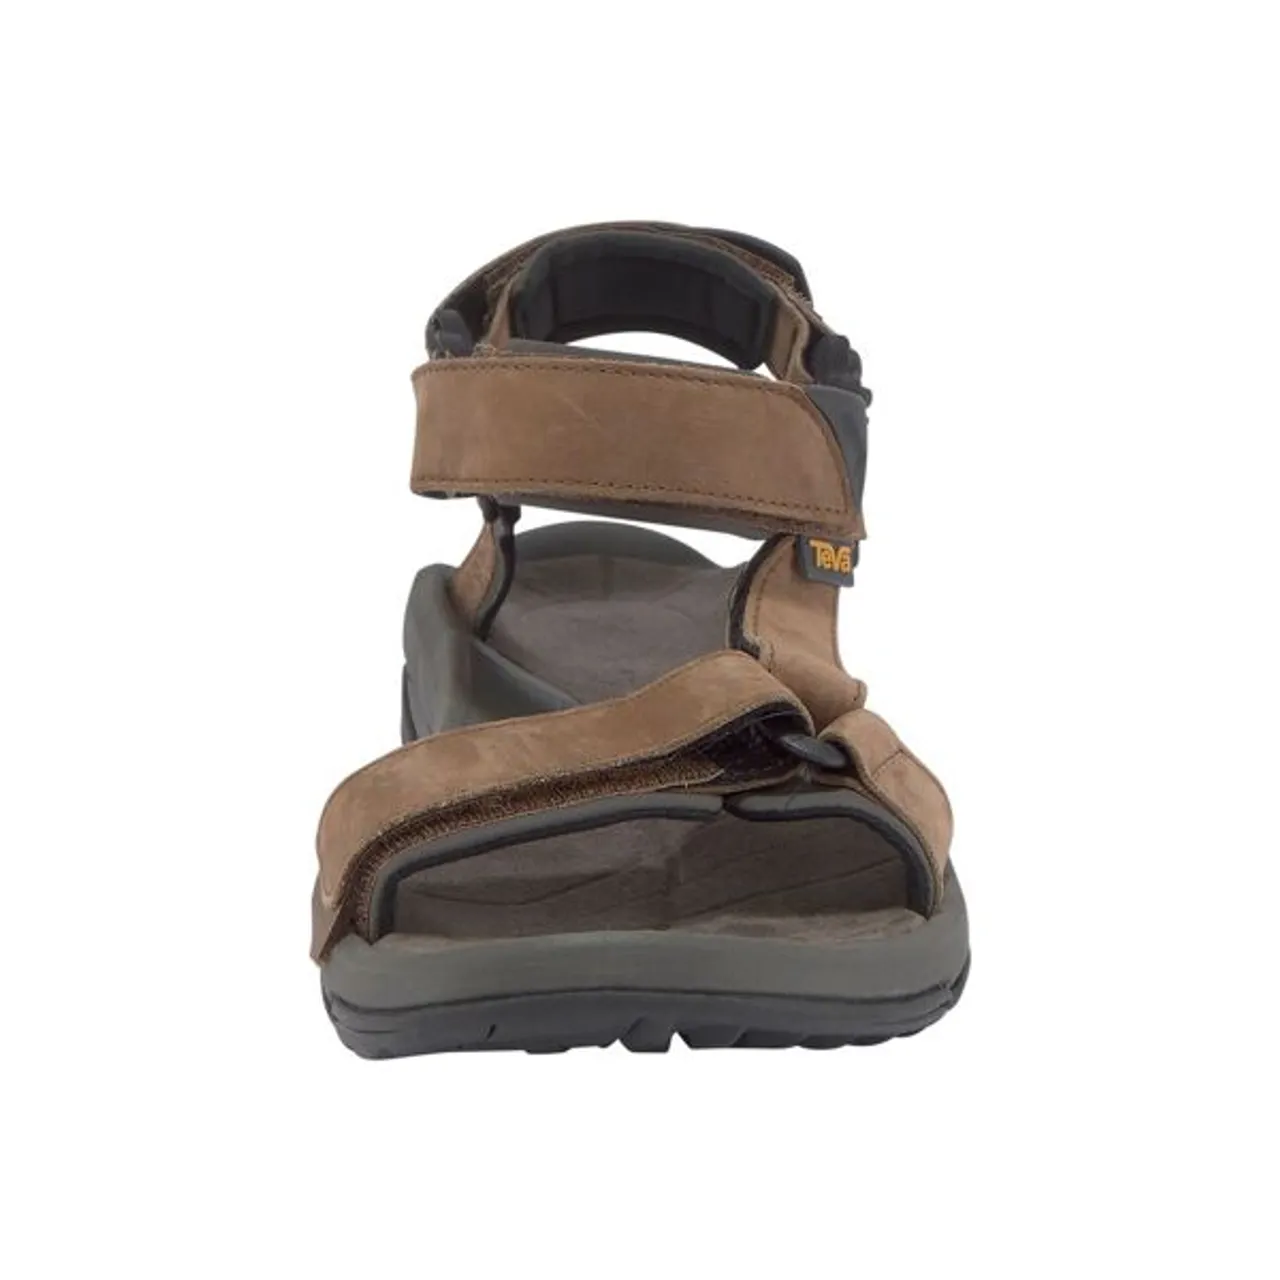 Sandale TEVA "Terra Fi Lite Leather" Gr. 43, braun Schuhe Outdoorsandale Herren Outdoor-Schuhe